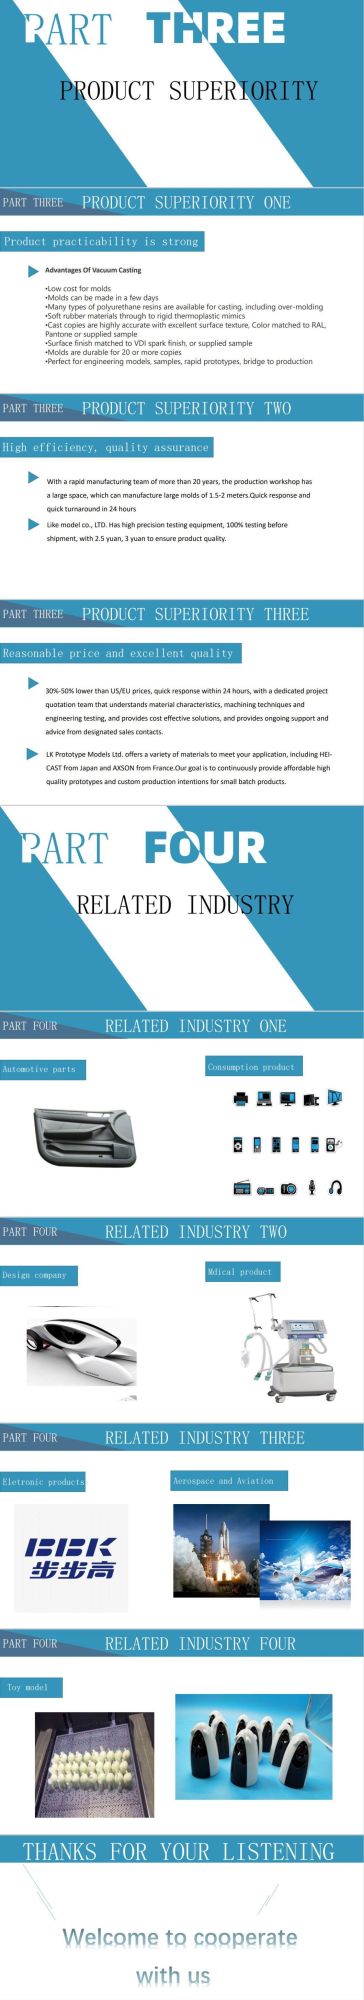 CNC Spart Parts Custom/Brass Knuckels Models Cars/OEM Machining/Precision Fastener Parts